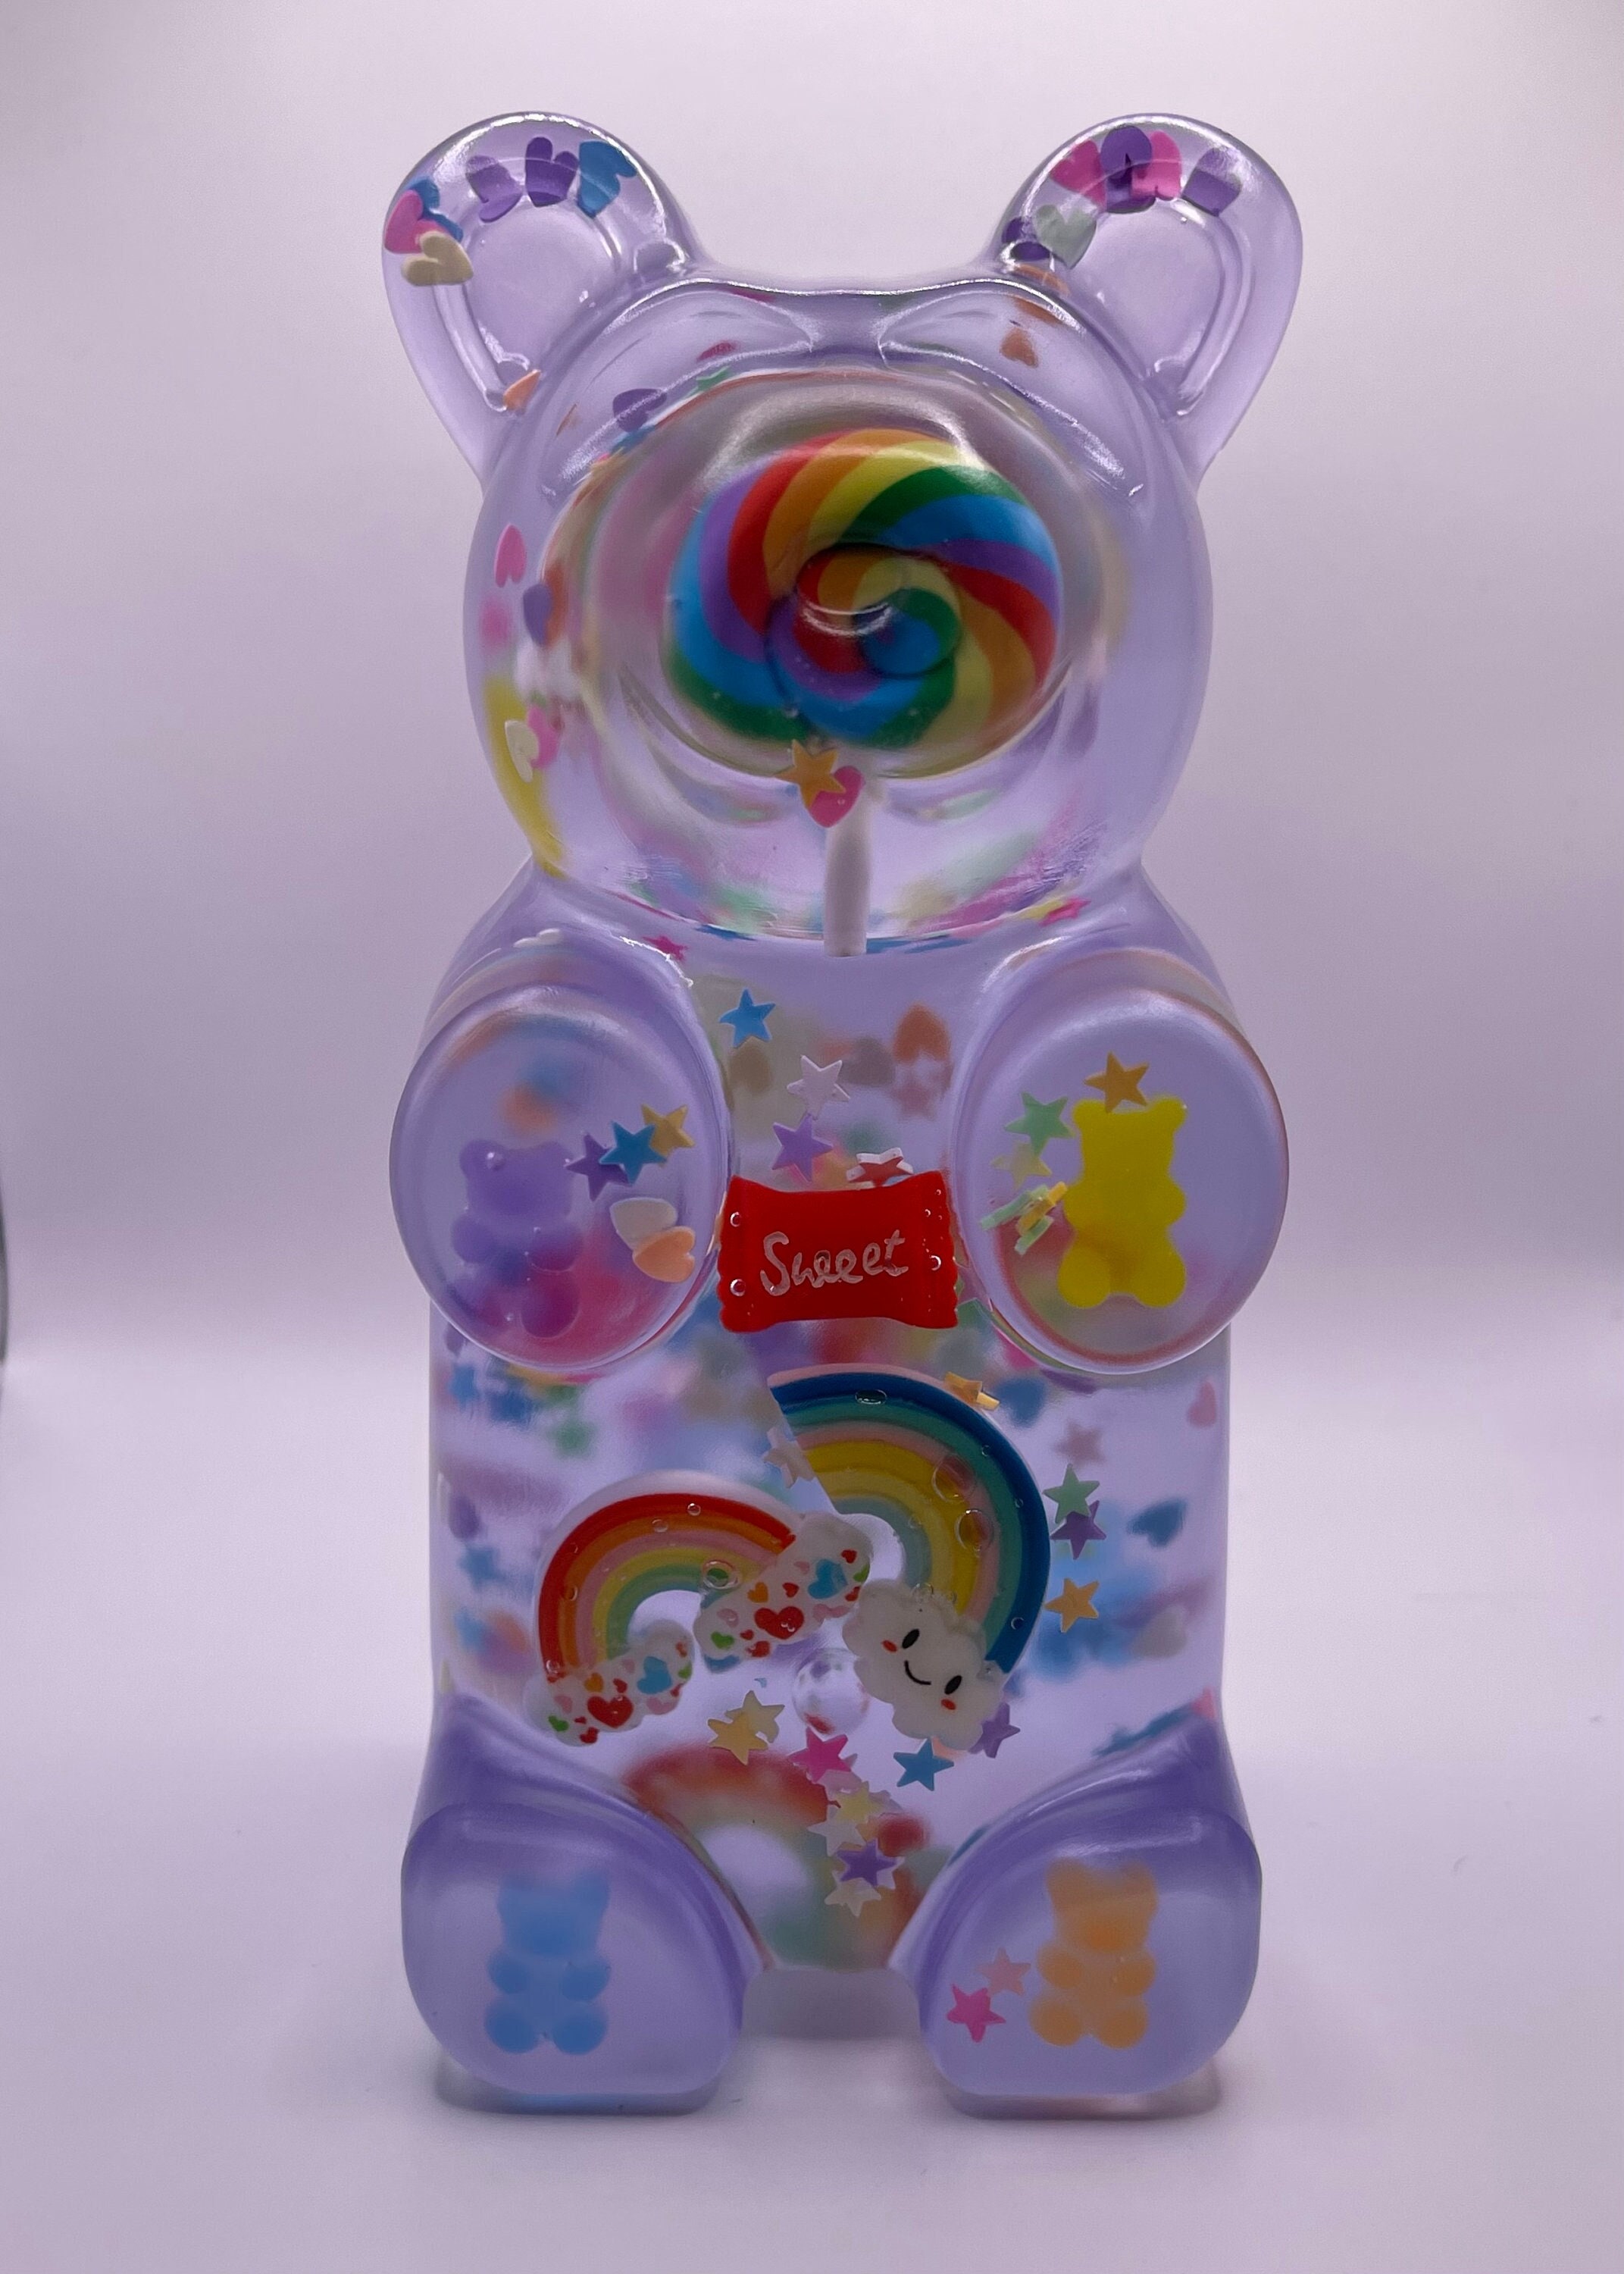 50 Mixed Color Transparent Acrylic Gummy Bear Beads 19mm horizontal hole  Funny